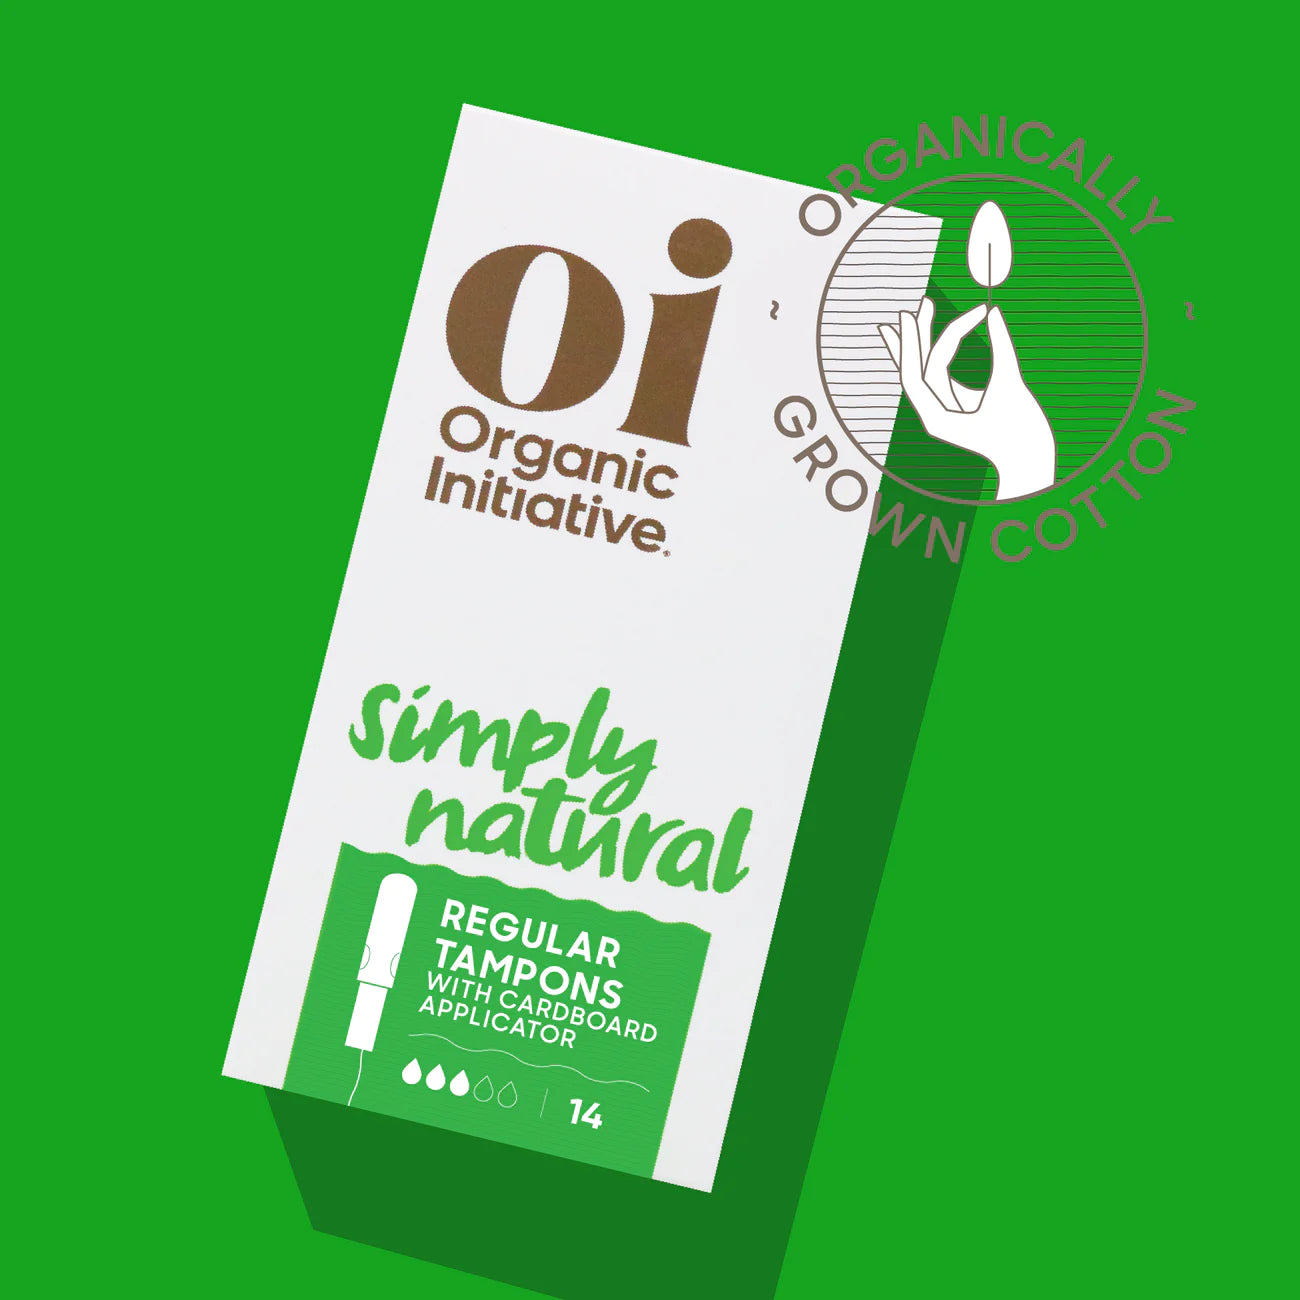 Oi Organic Applicator Tampons. 14 regular applicator tampons